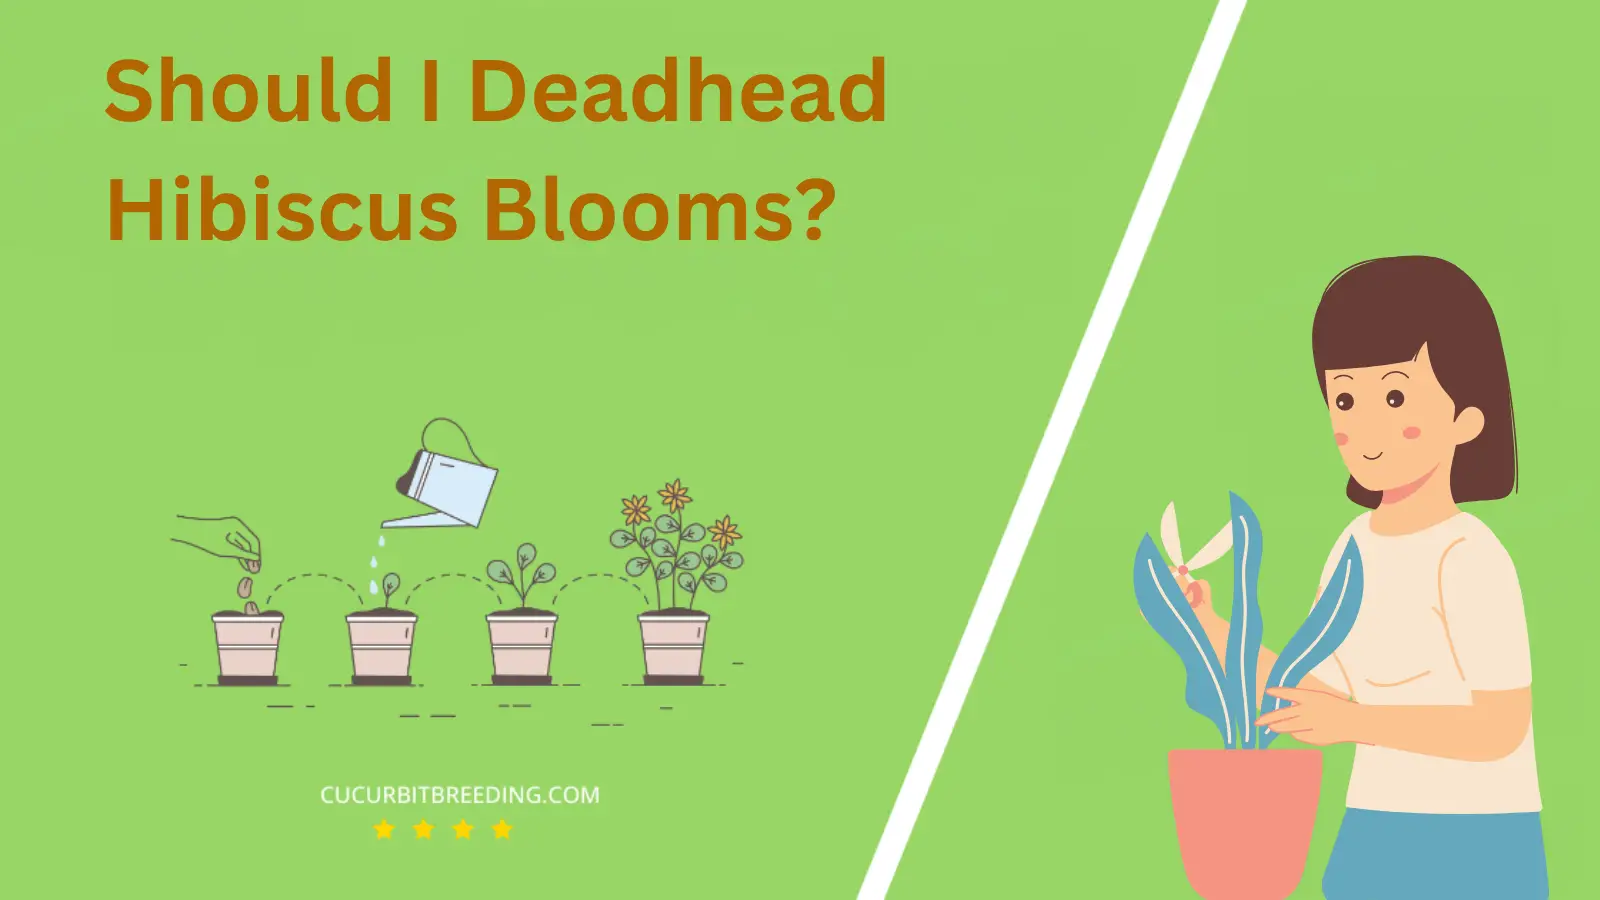 Should I Deadhead Hibiscus Blooms?